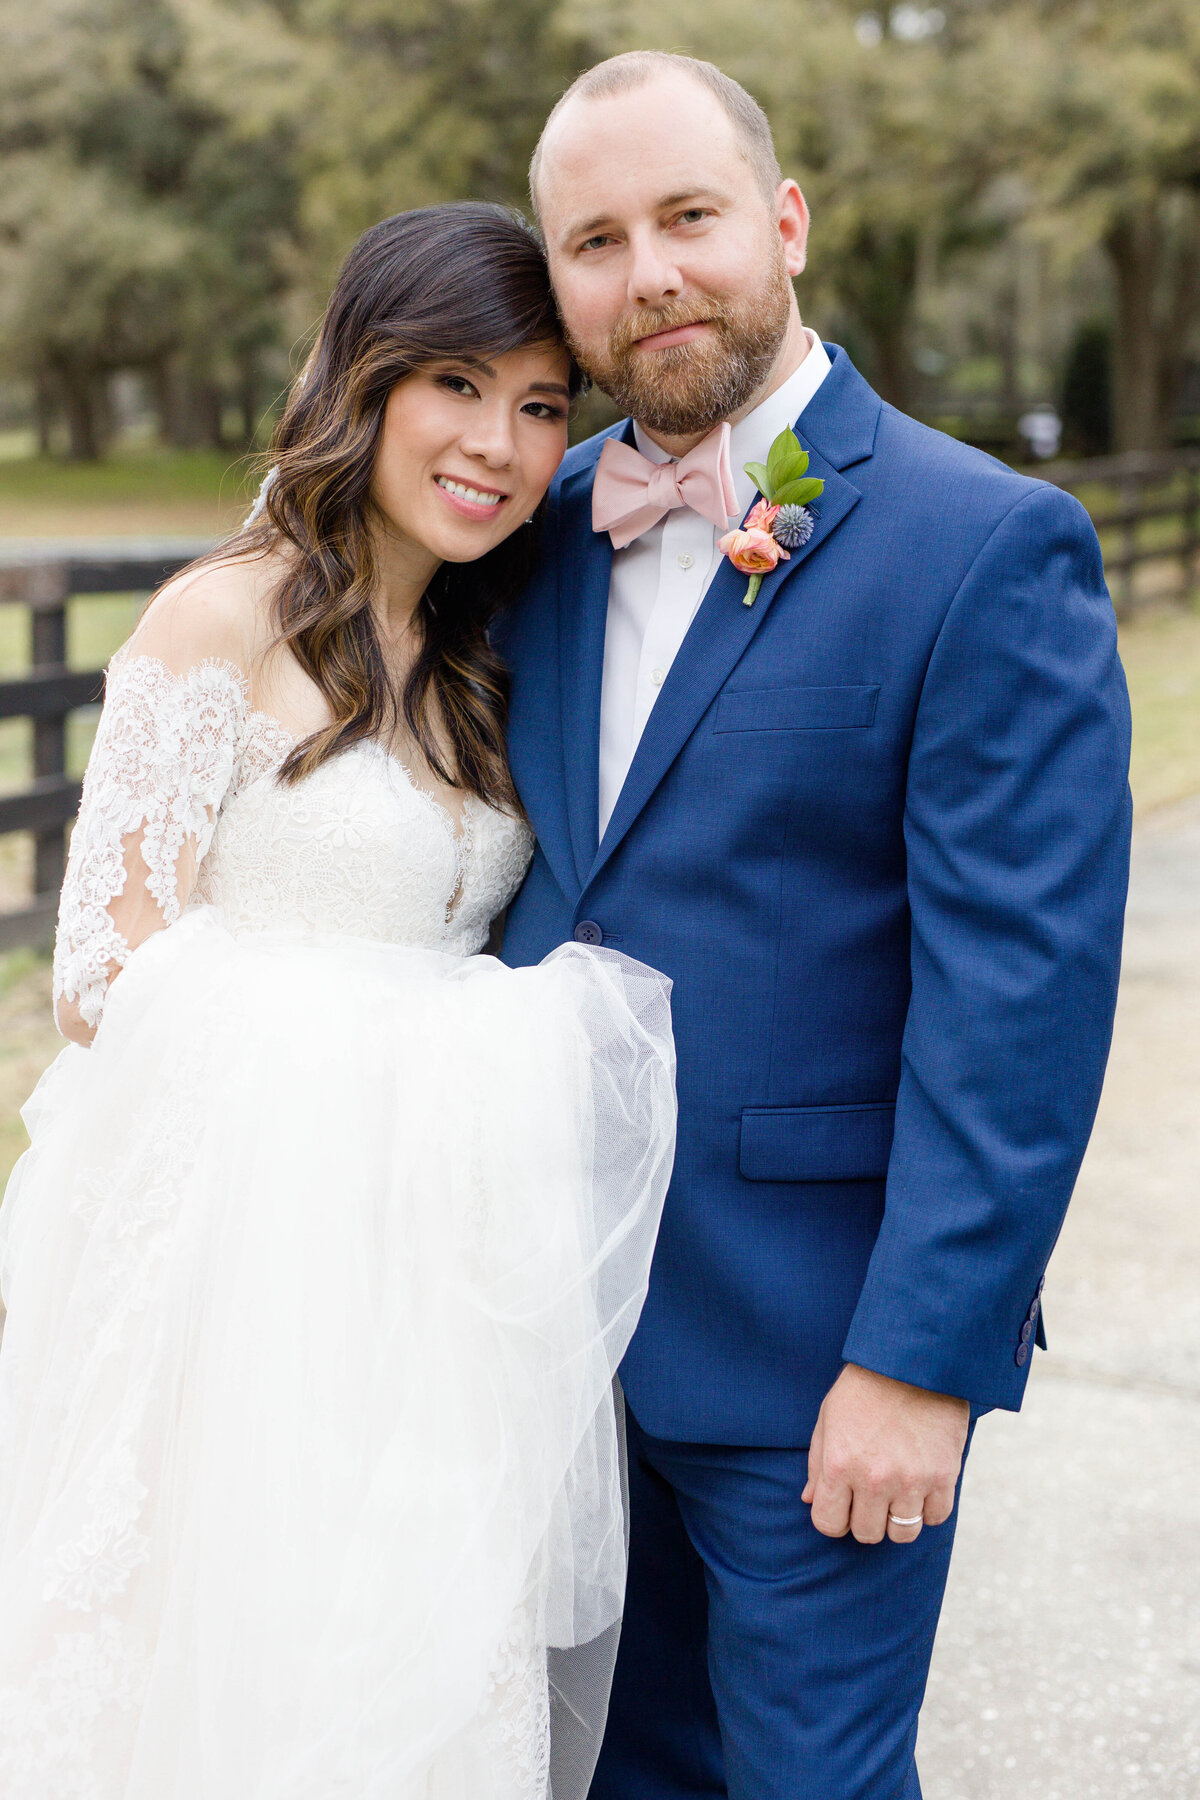 Wedding Photo by Lucas Mason Photography in Orlando, Windermere, Winter Garden area